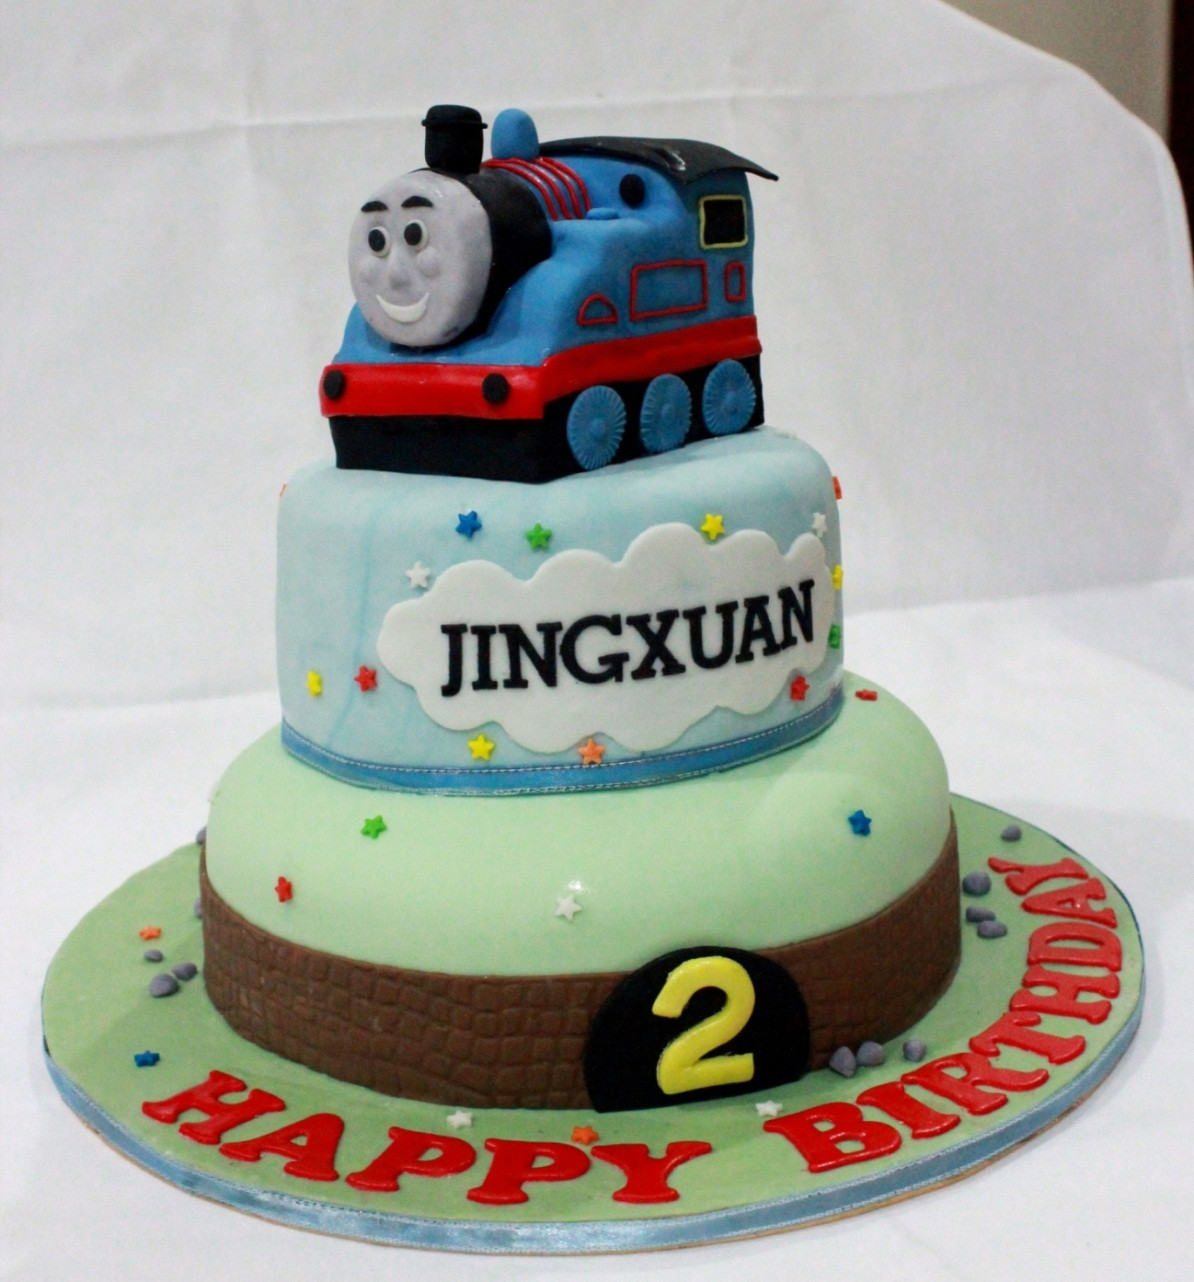 Best ideas about Thomas The Train Birthday Cake
. Save or Pin Bearylicious Cakes Thomas the Train birthday cake Now.